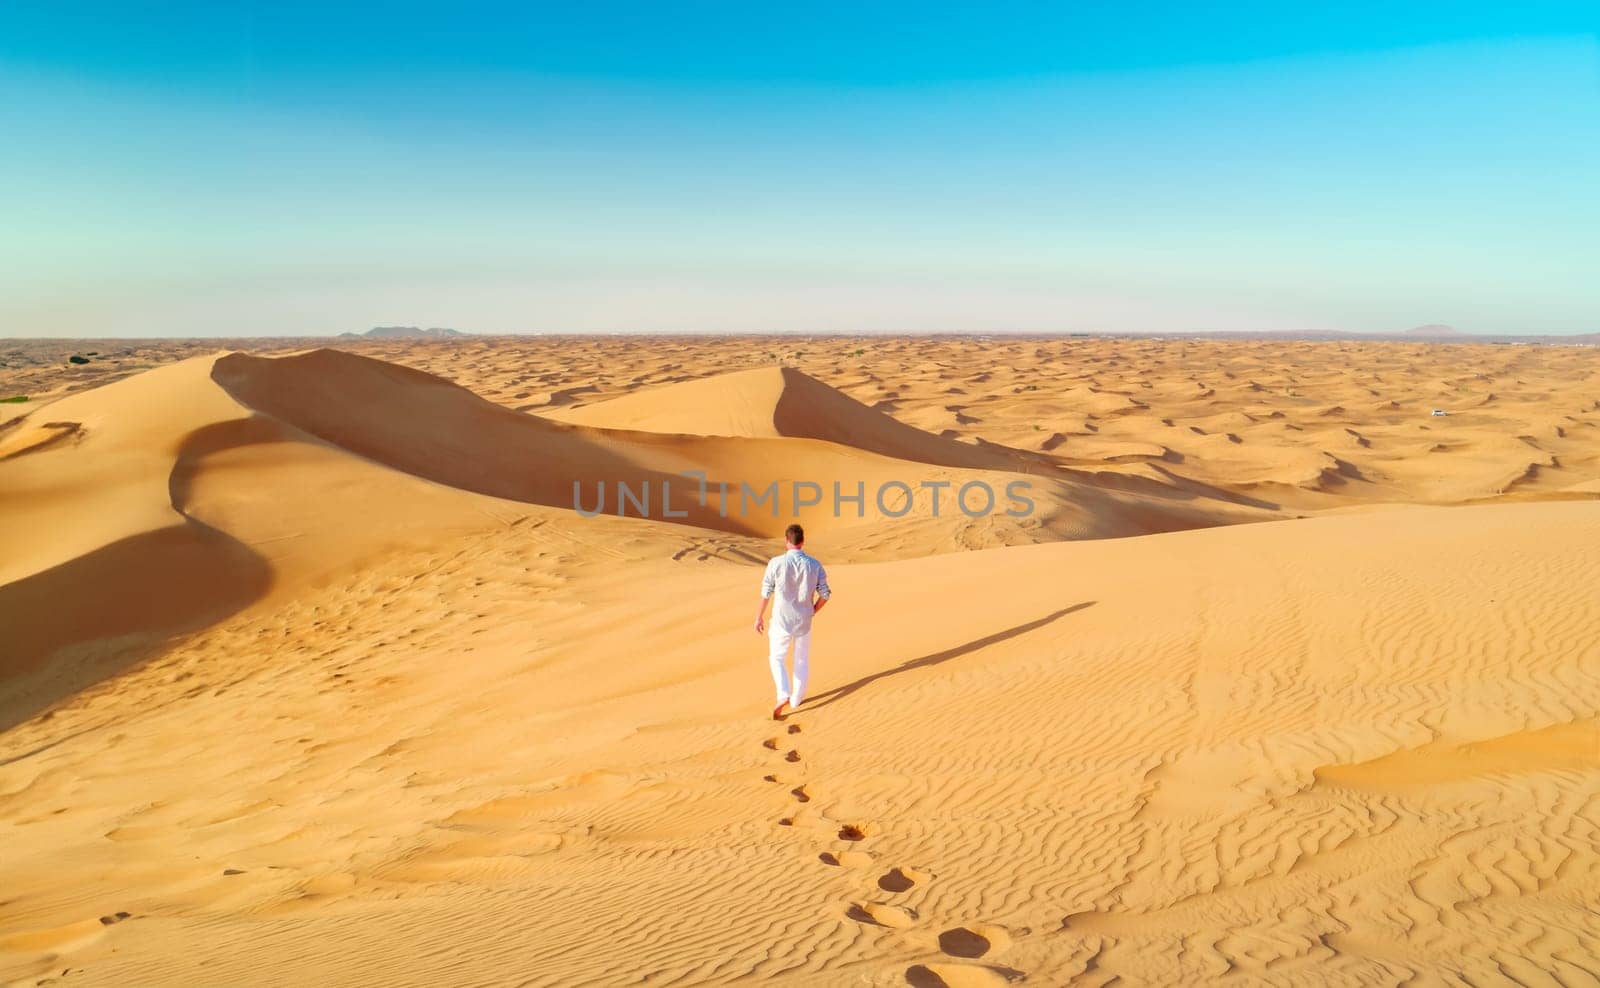 Dubai desert sand dunes, men on Dubai desert safari, United Arab Emirates vacation, men on vacation in Dubai Emirates walking in the sand dunes